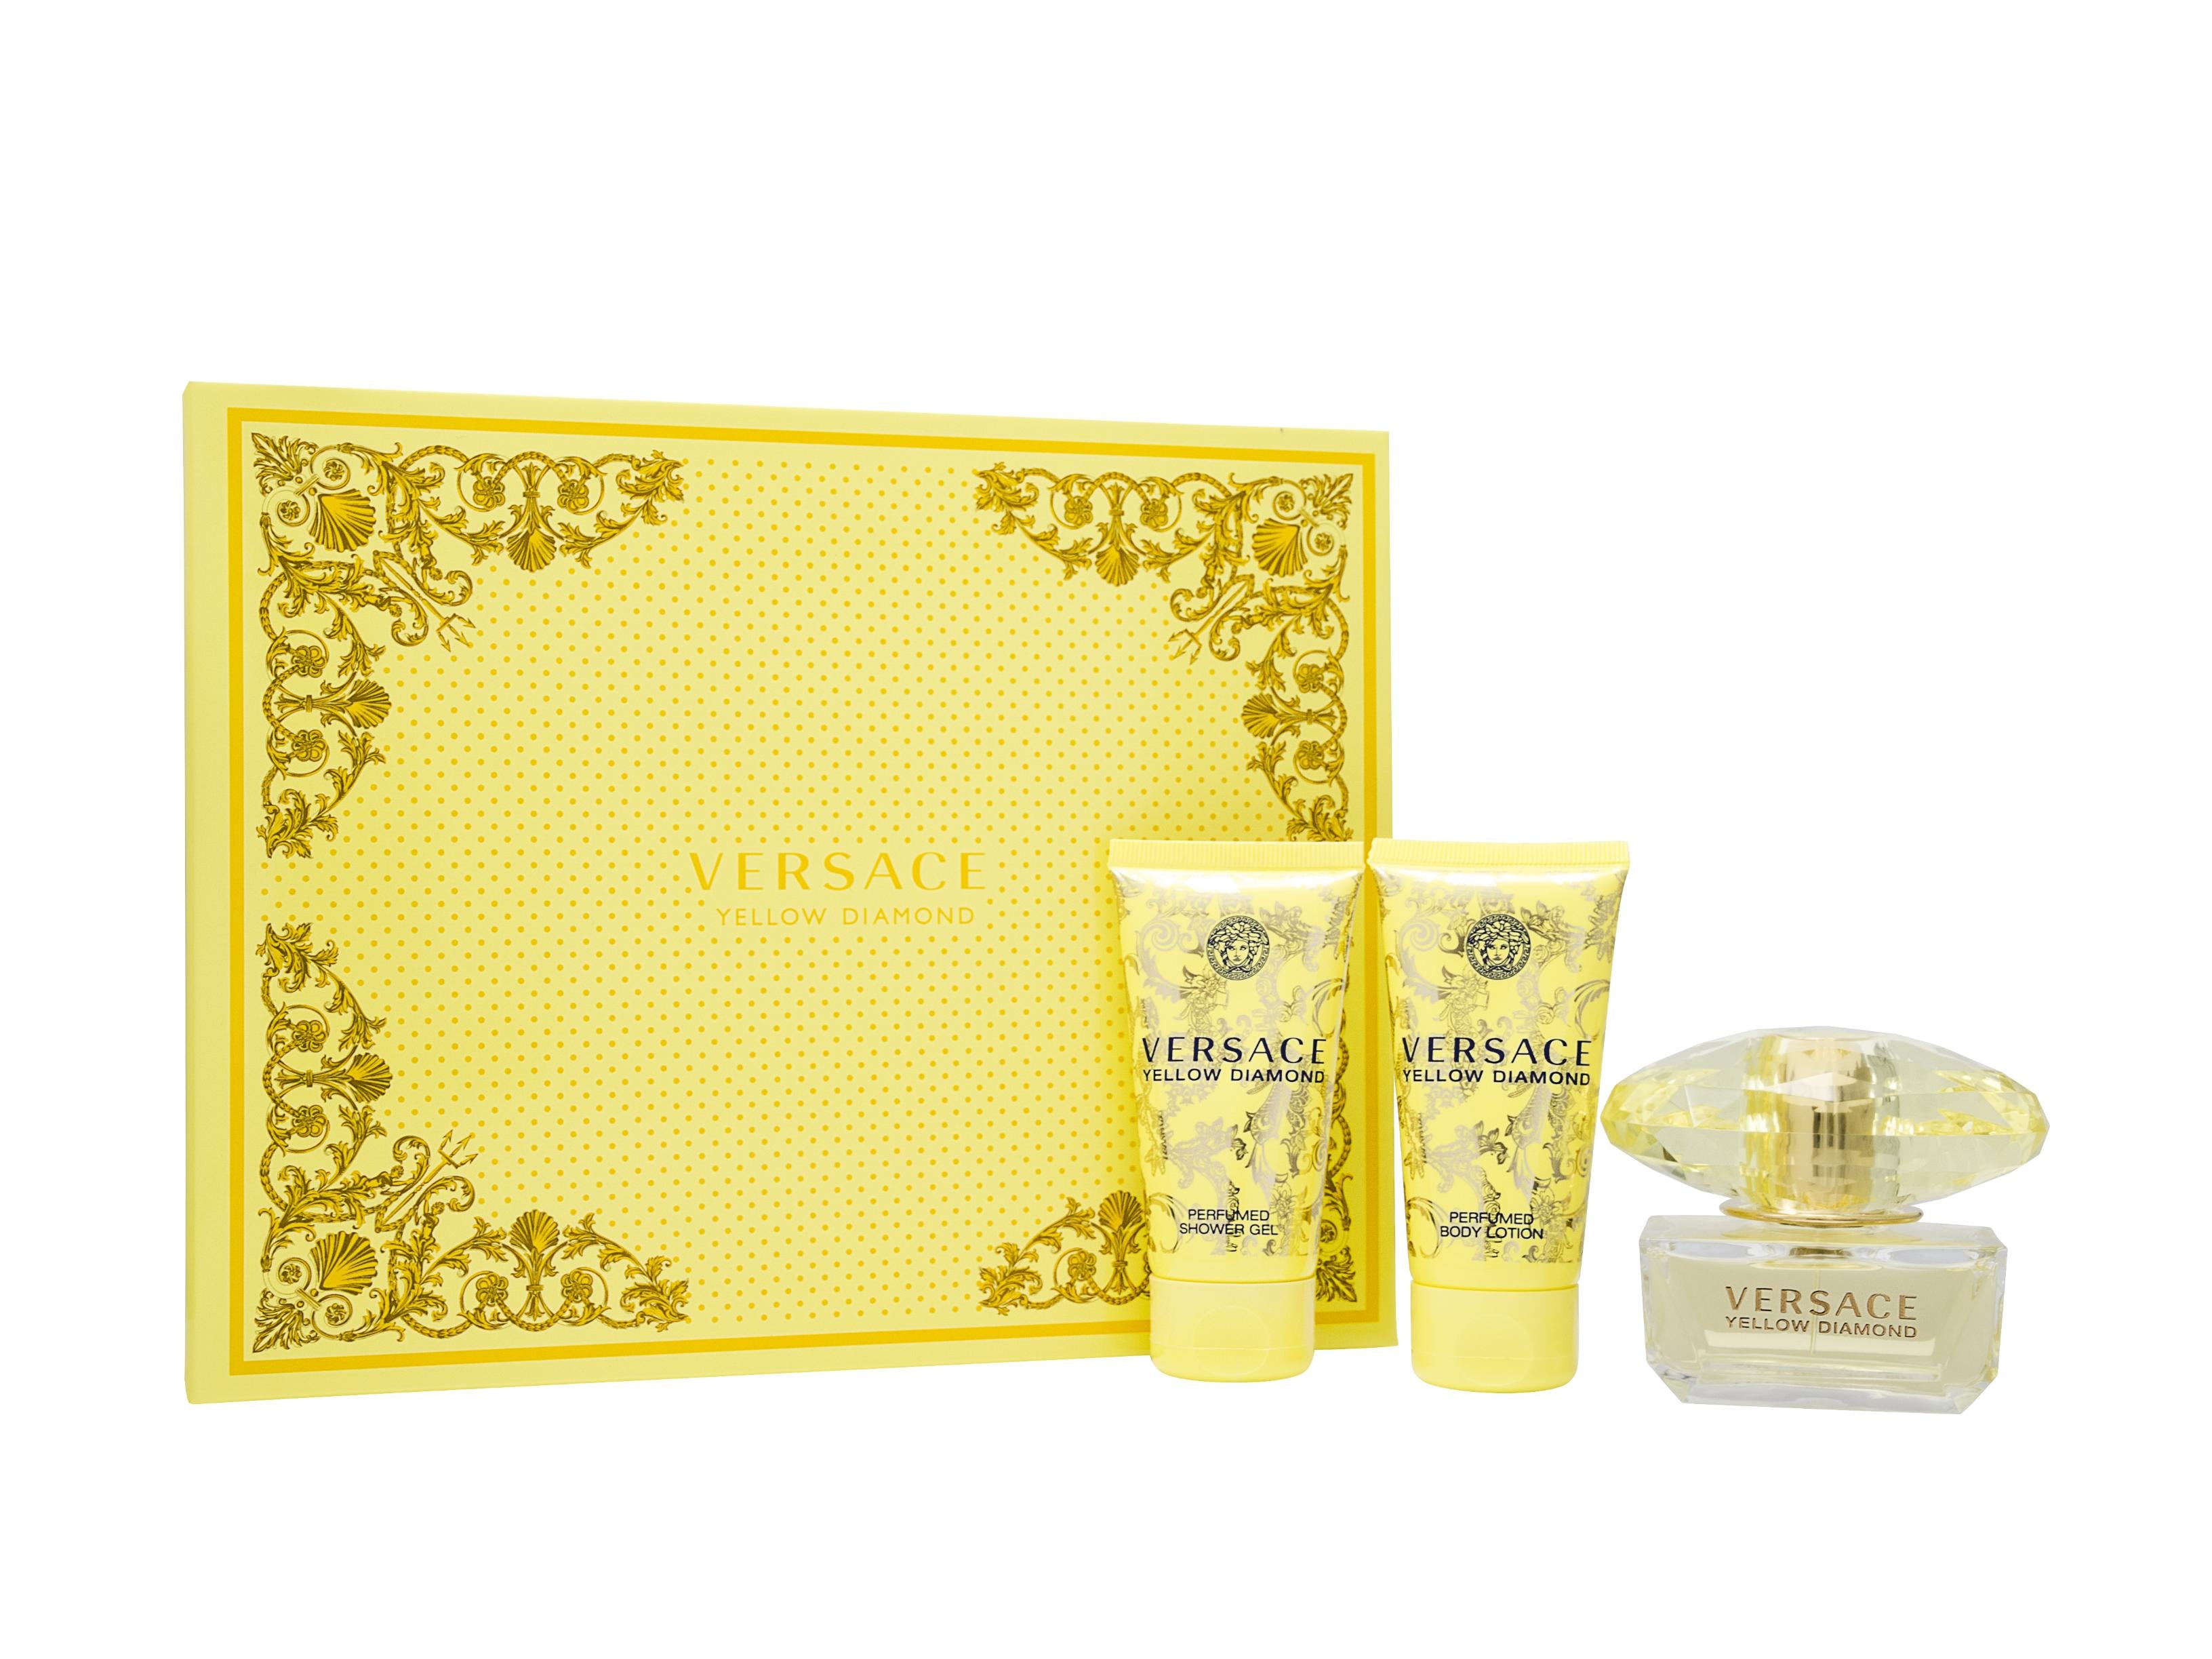 View Versace Yellow Diamond Gift Set 50ml EDT 50ml Shower Gel 50ml Body Lotion information